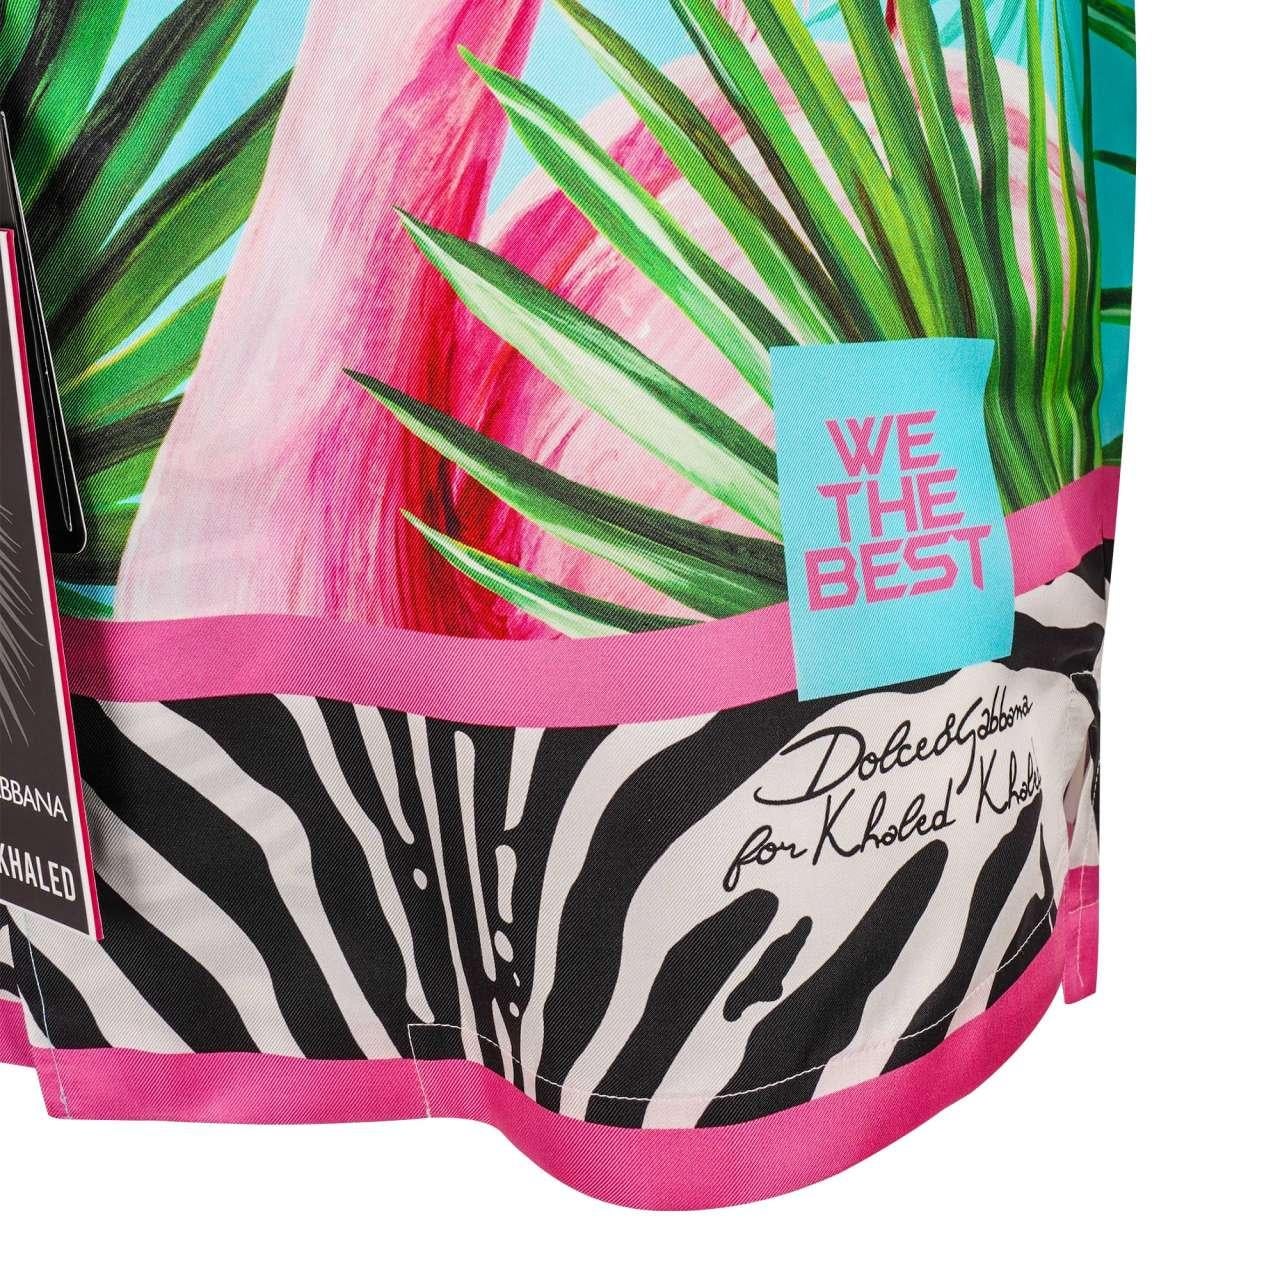 Men's Dolce & Gabbana - DJ Khaled Silk Flamingo Zebra Shirt with Sunglasses and CD 42 For Sale